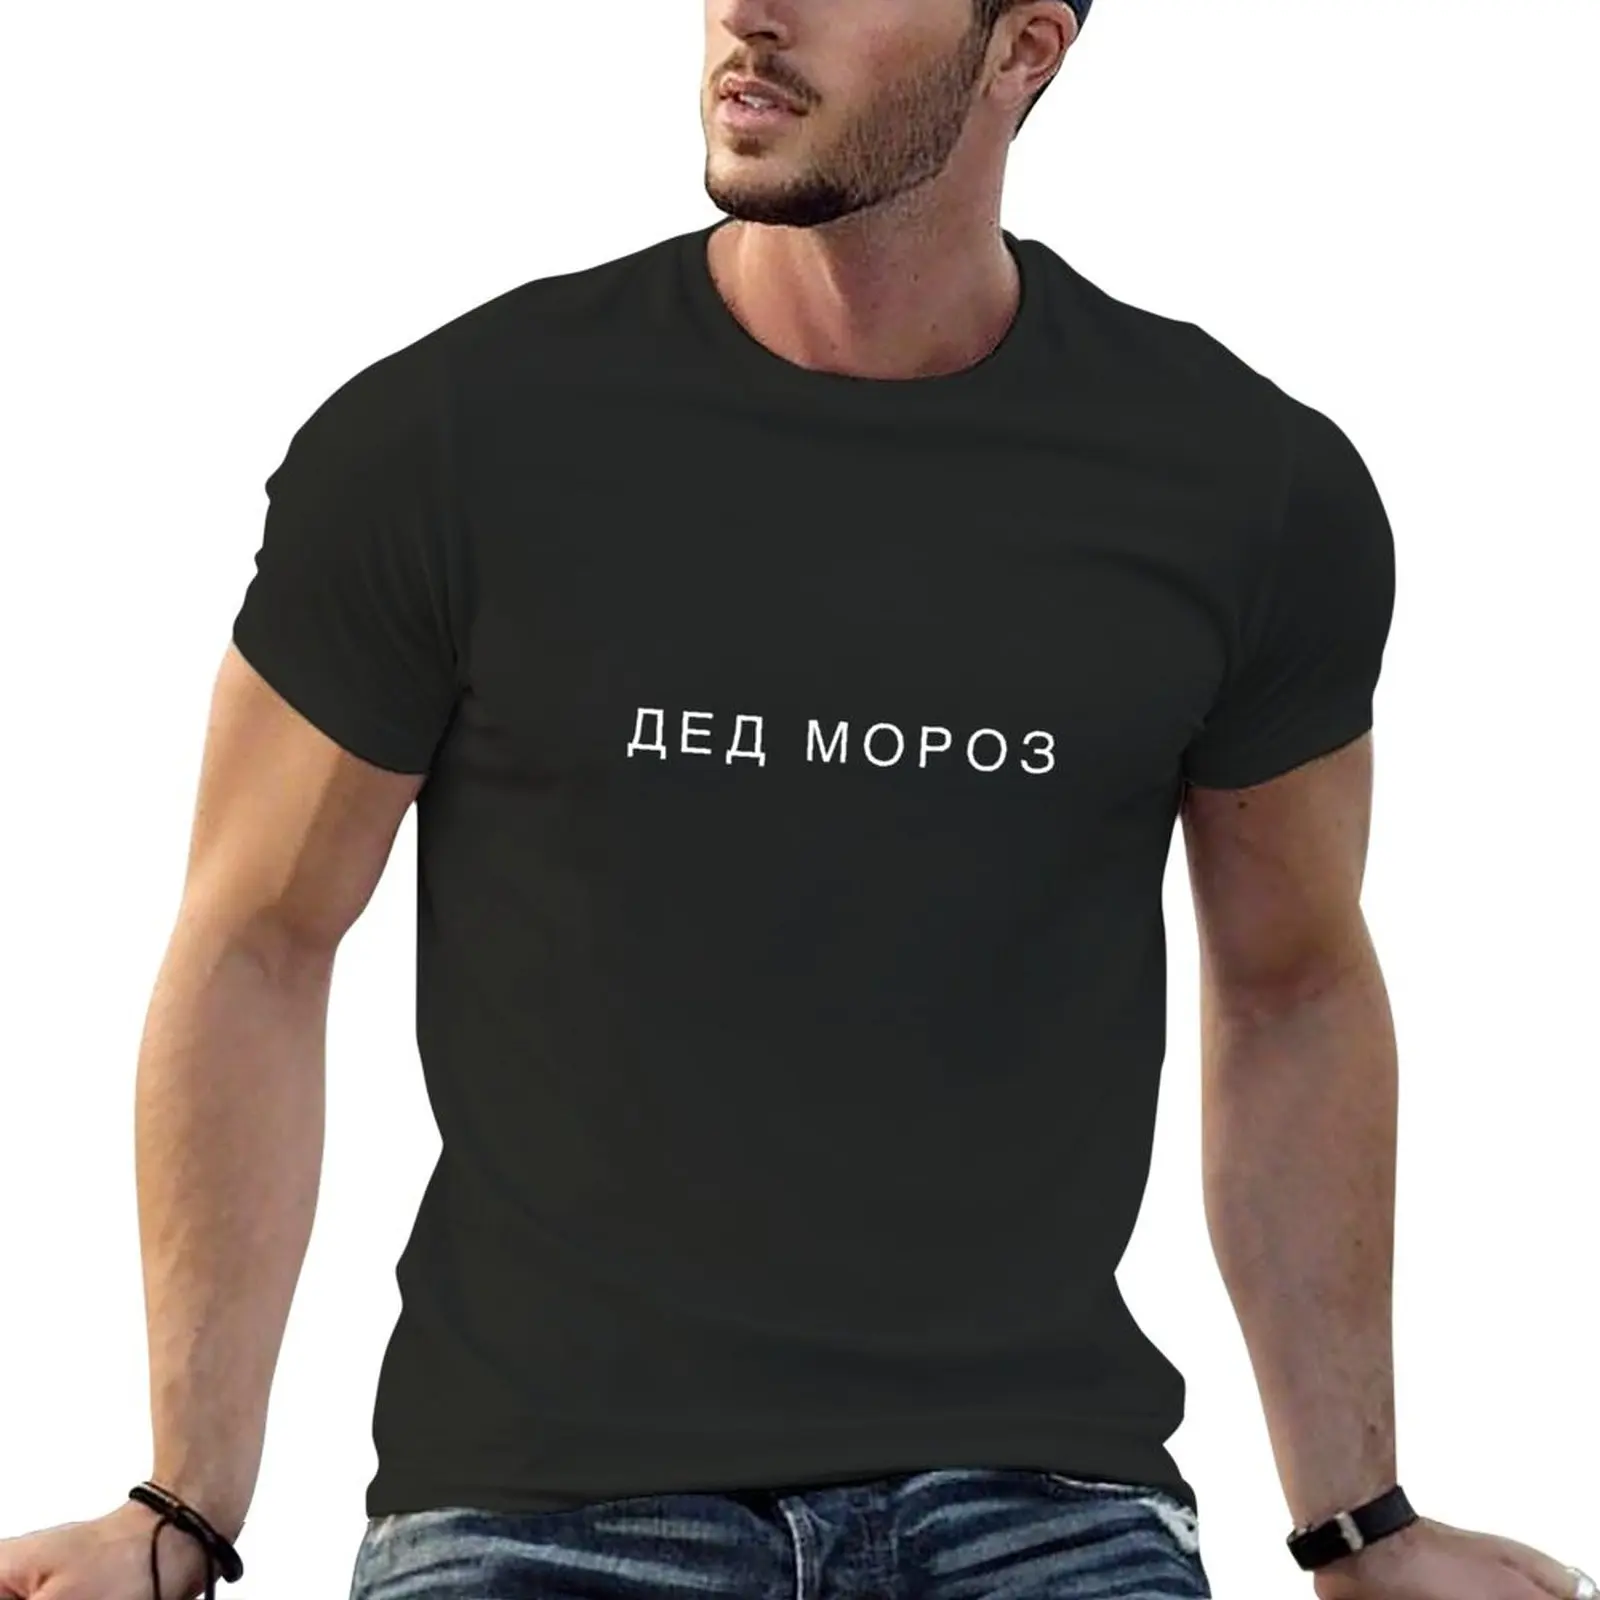 

Дед Мороз (Santa Claus) Russian T-Shirt Aesthetic clothing plus size tops mens t shirts pack